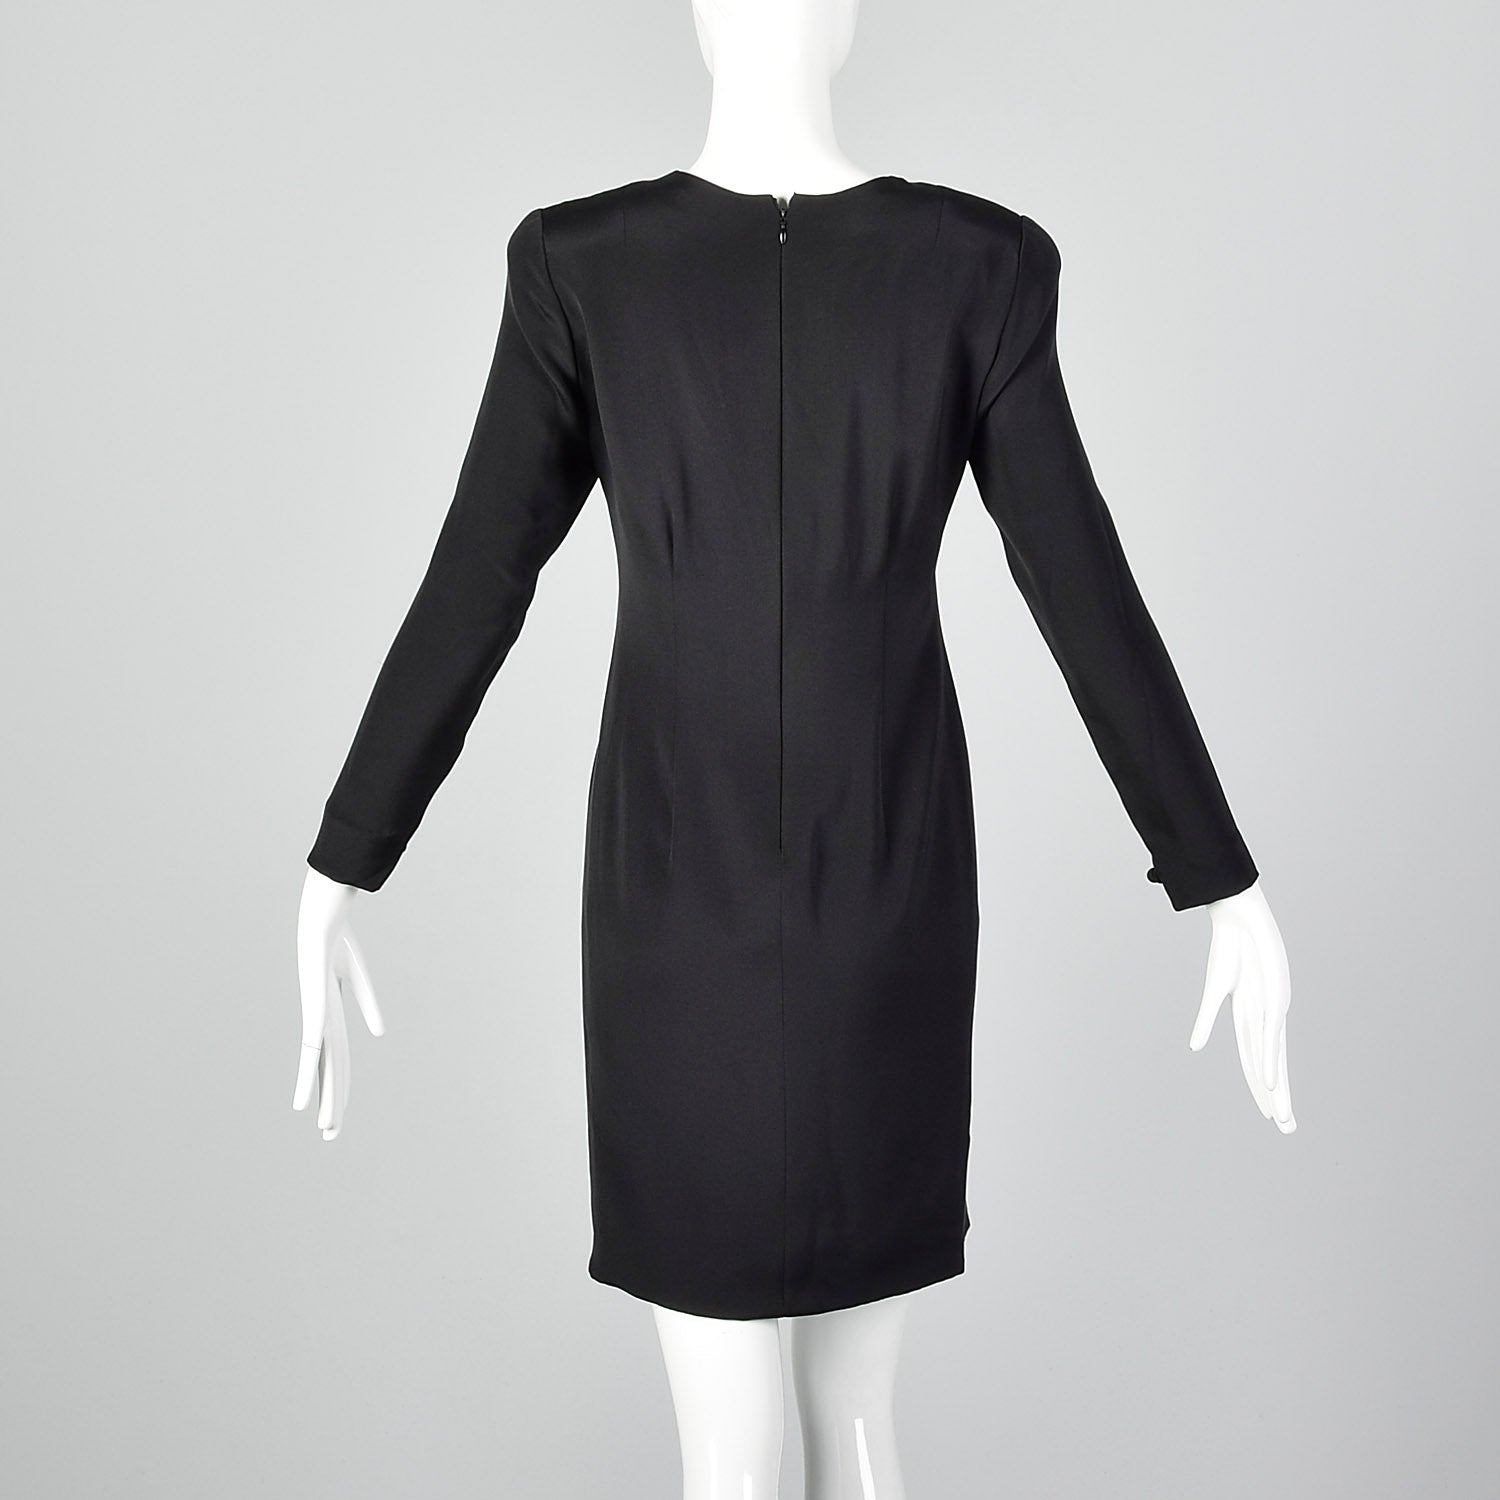 Pauline Trigere Late 1970s / Early 1980s Black Dress